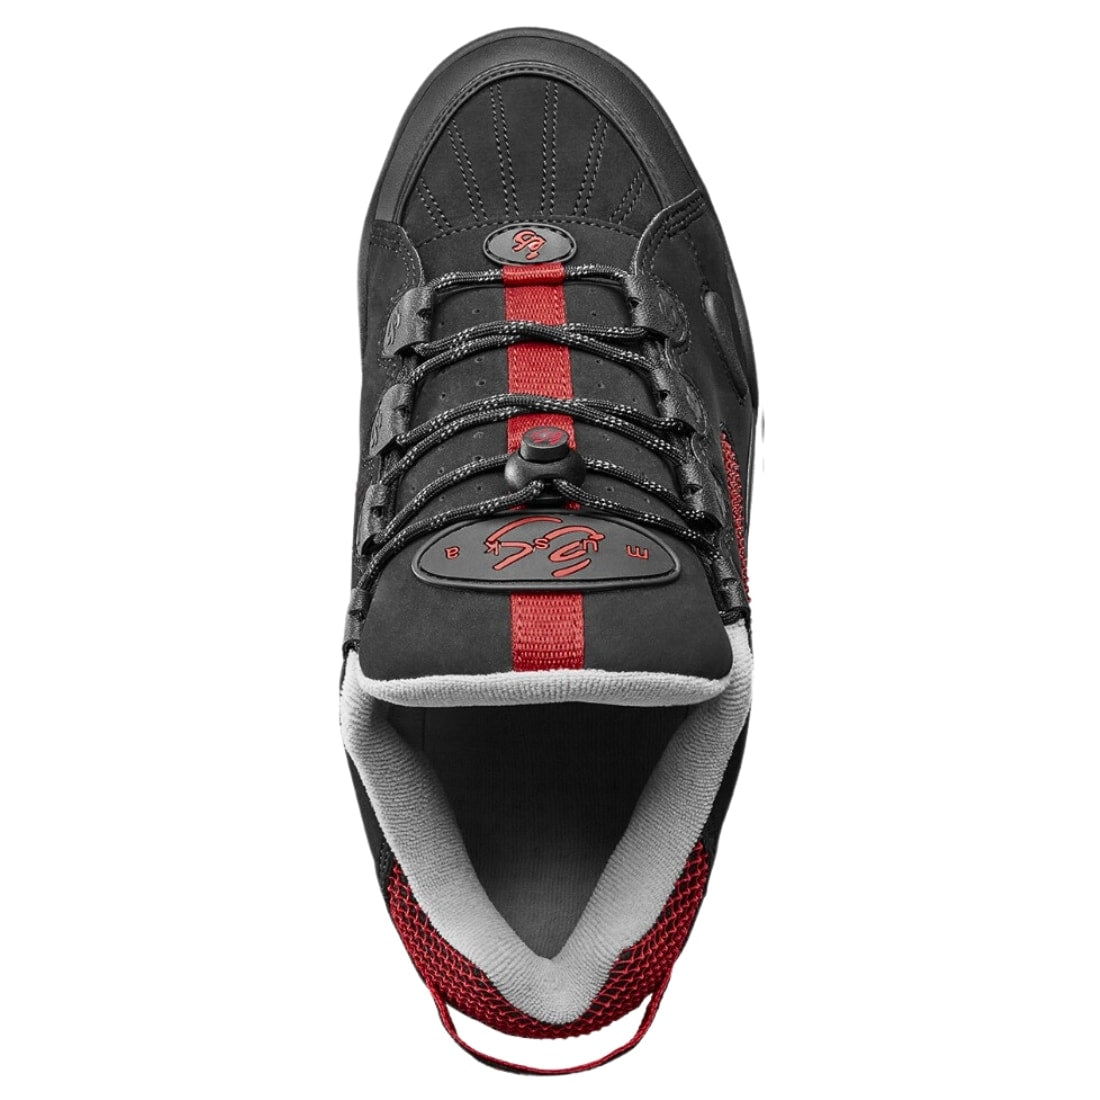 eS Muska Skate Shoes - Black/Red